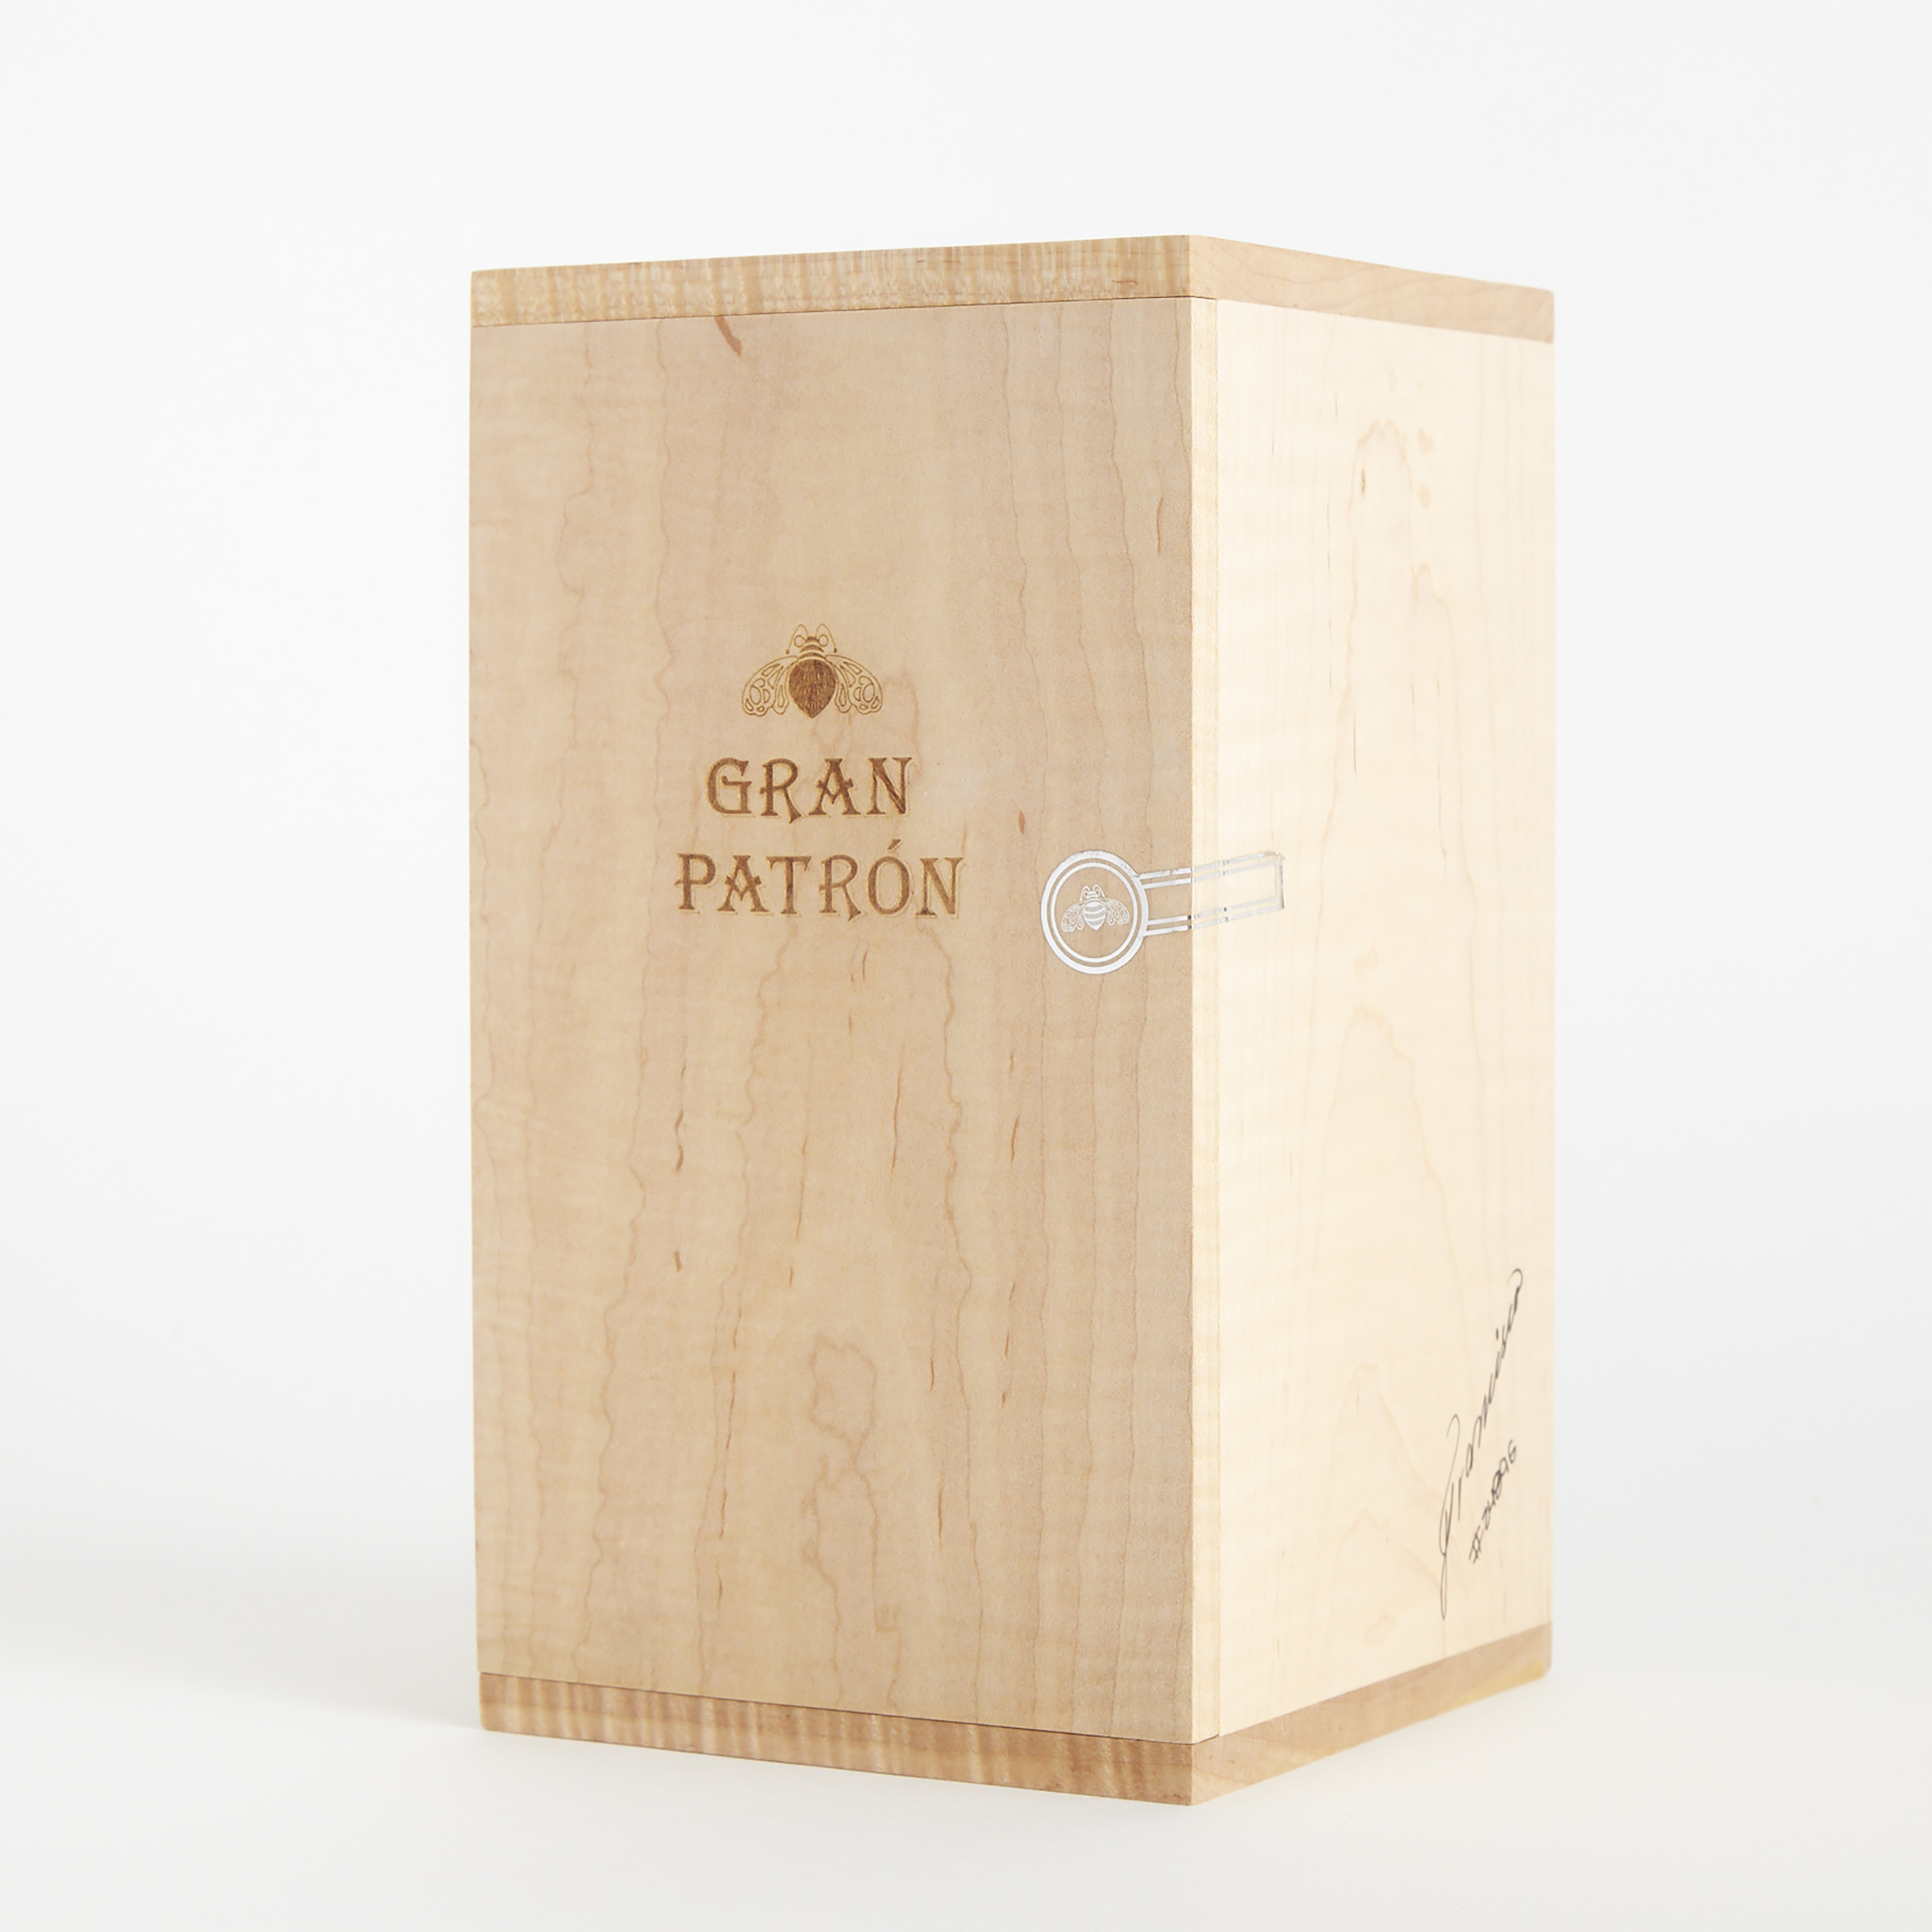 GRAN PATRÓN PLATINUM TEQUILA NAS (ONE 750 ML)